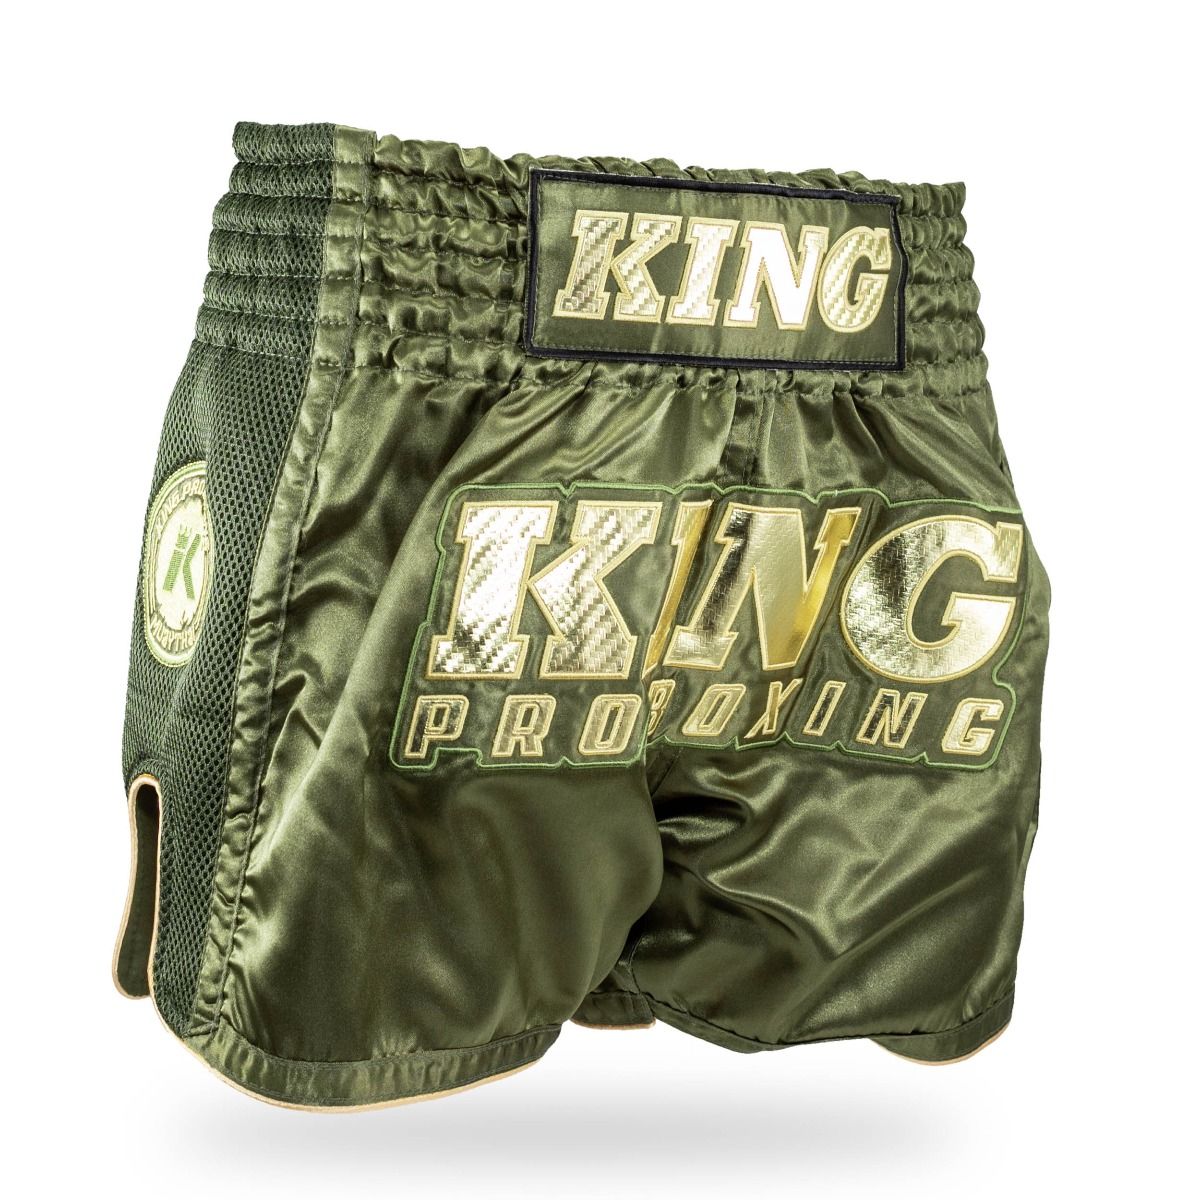 King Pro Boxing - fightshorts - BT X7 - groen - licht groen